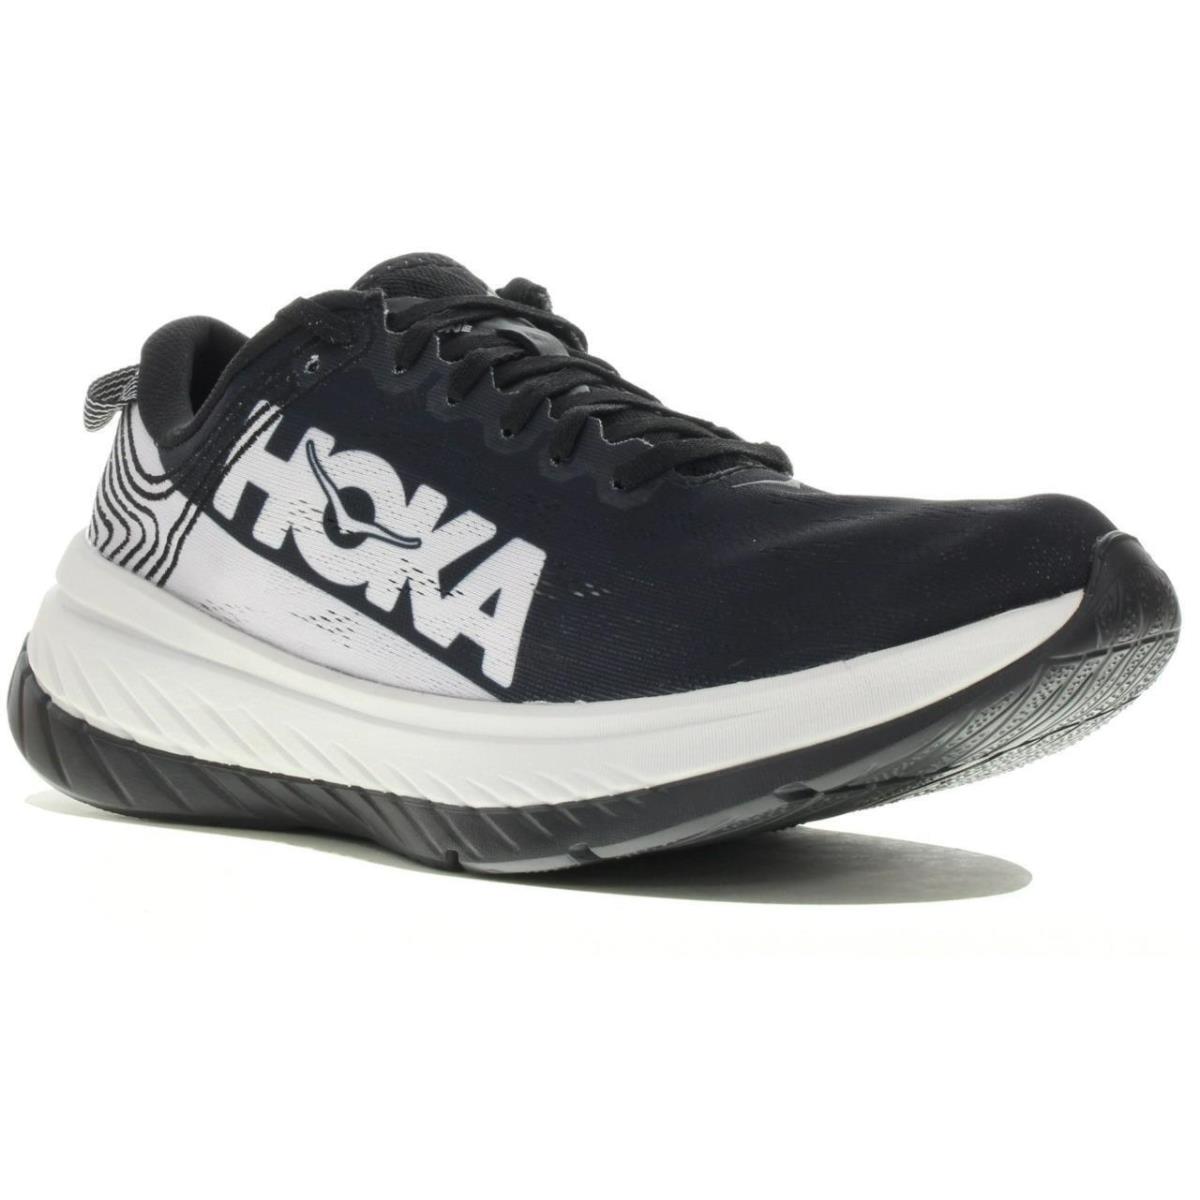 Men`s Hoka One One Carbon X Running Shoes Size 7.5 Black/white 1102886